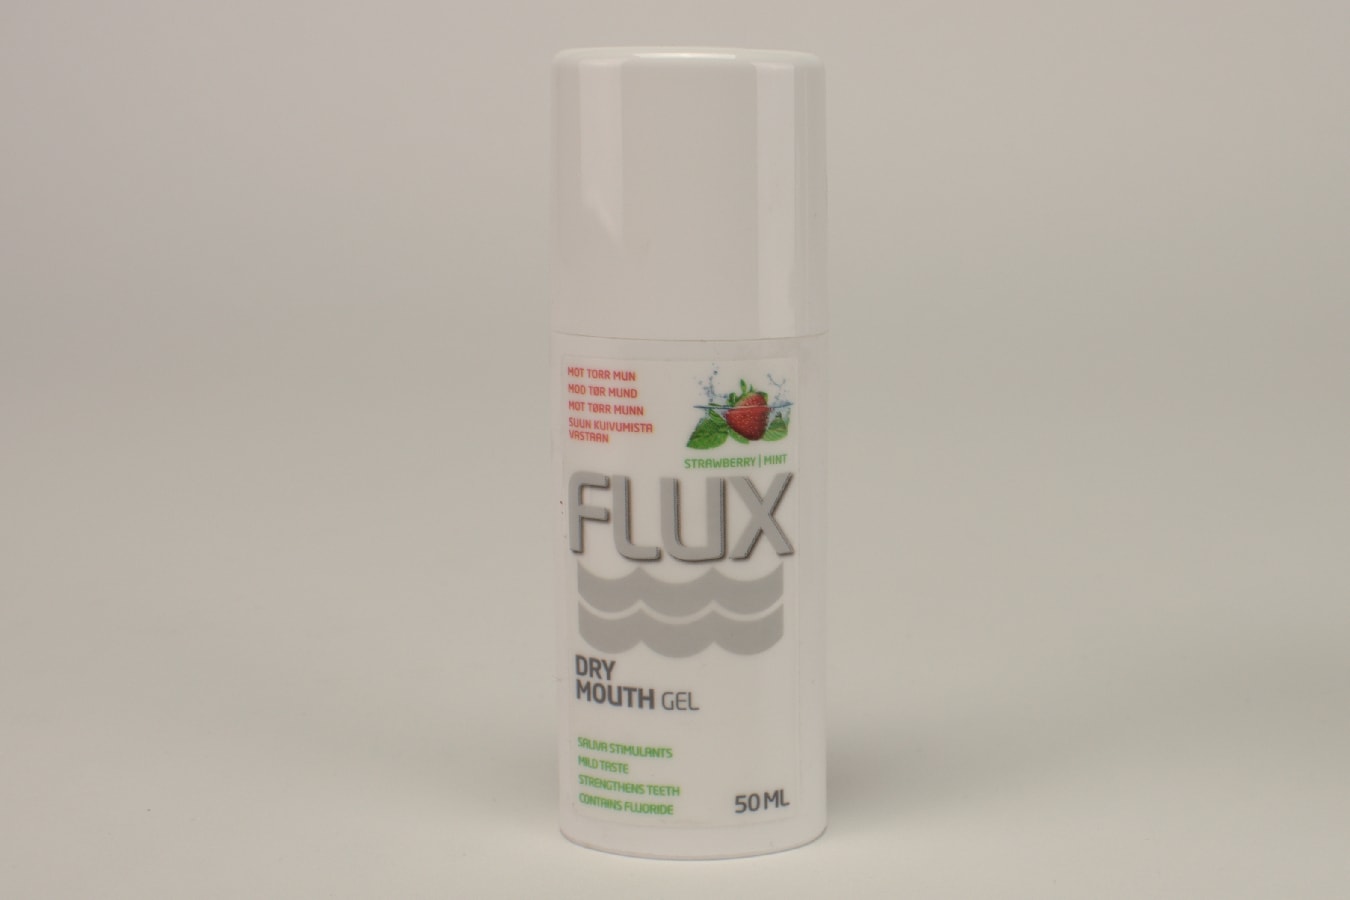 Flux Dry Mouth Gel 50ml